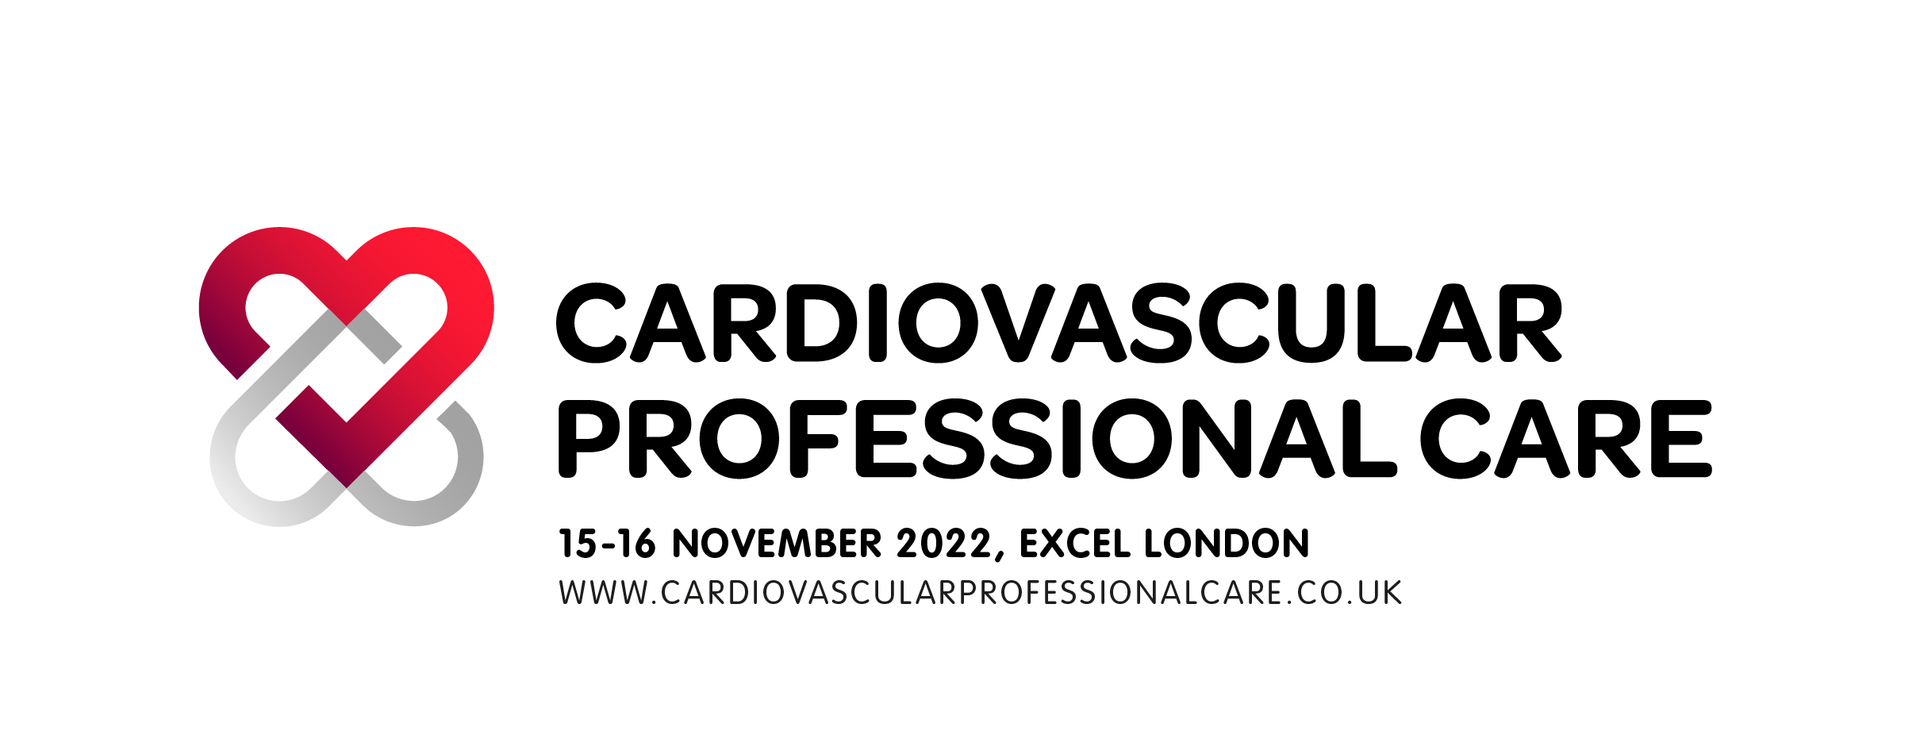 Cardiovascular Professional Care 2022, London, England, United Kingdom